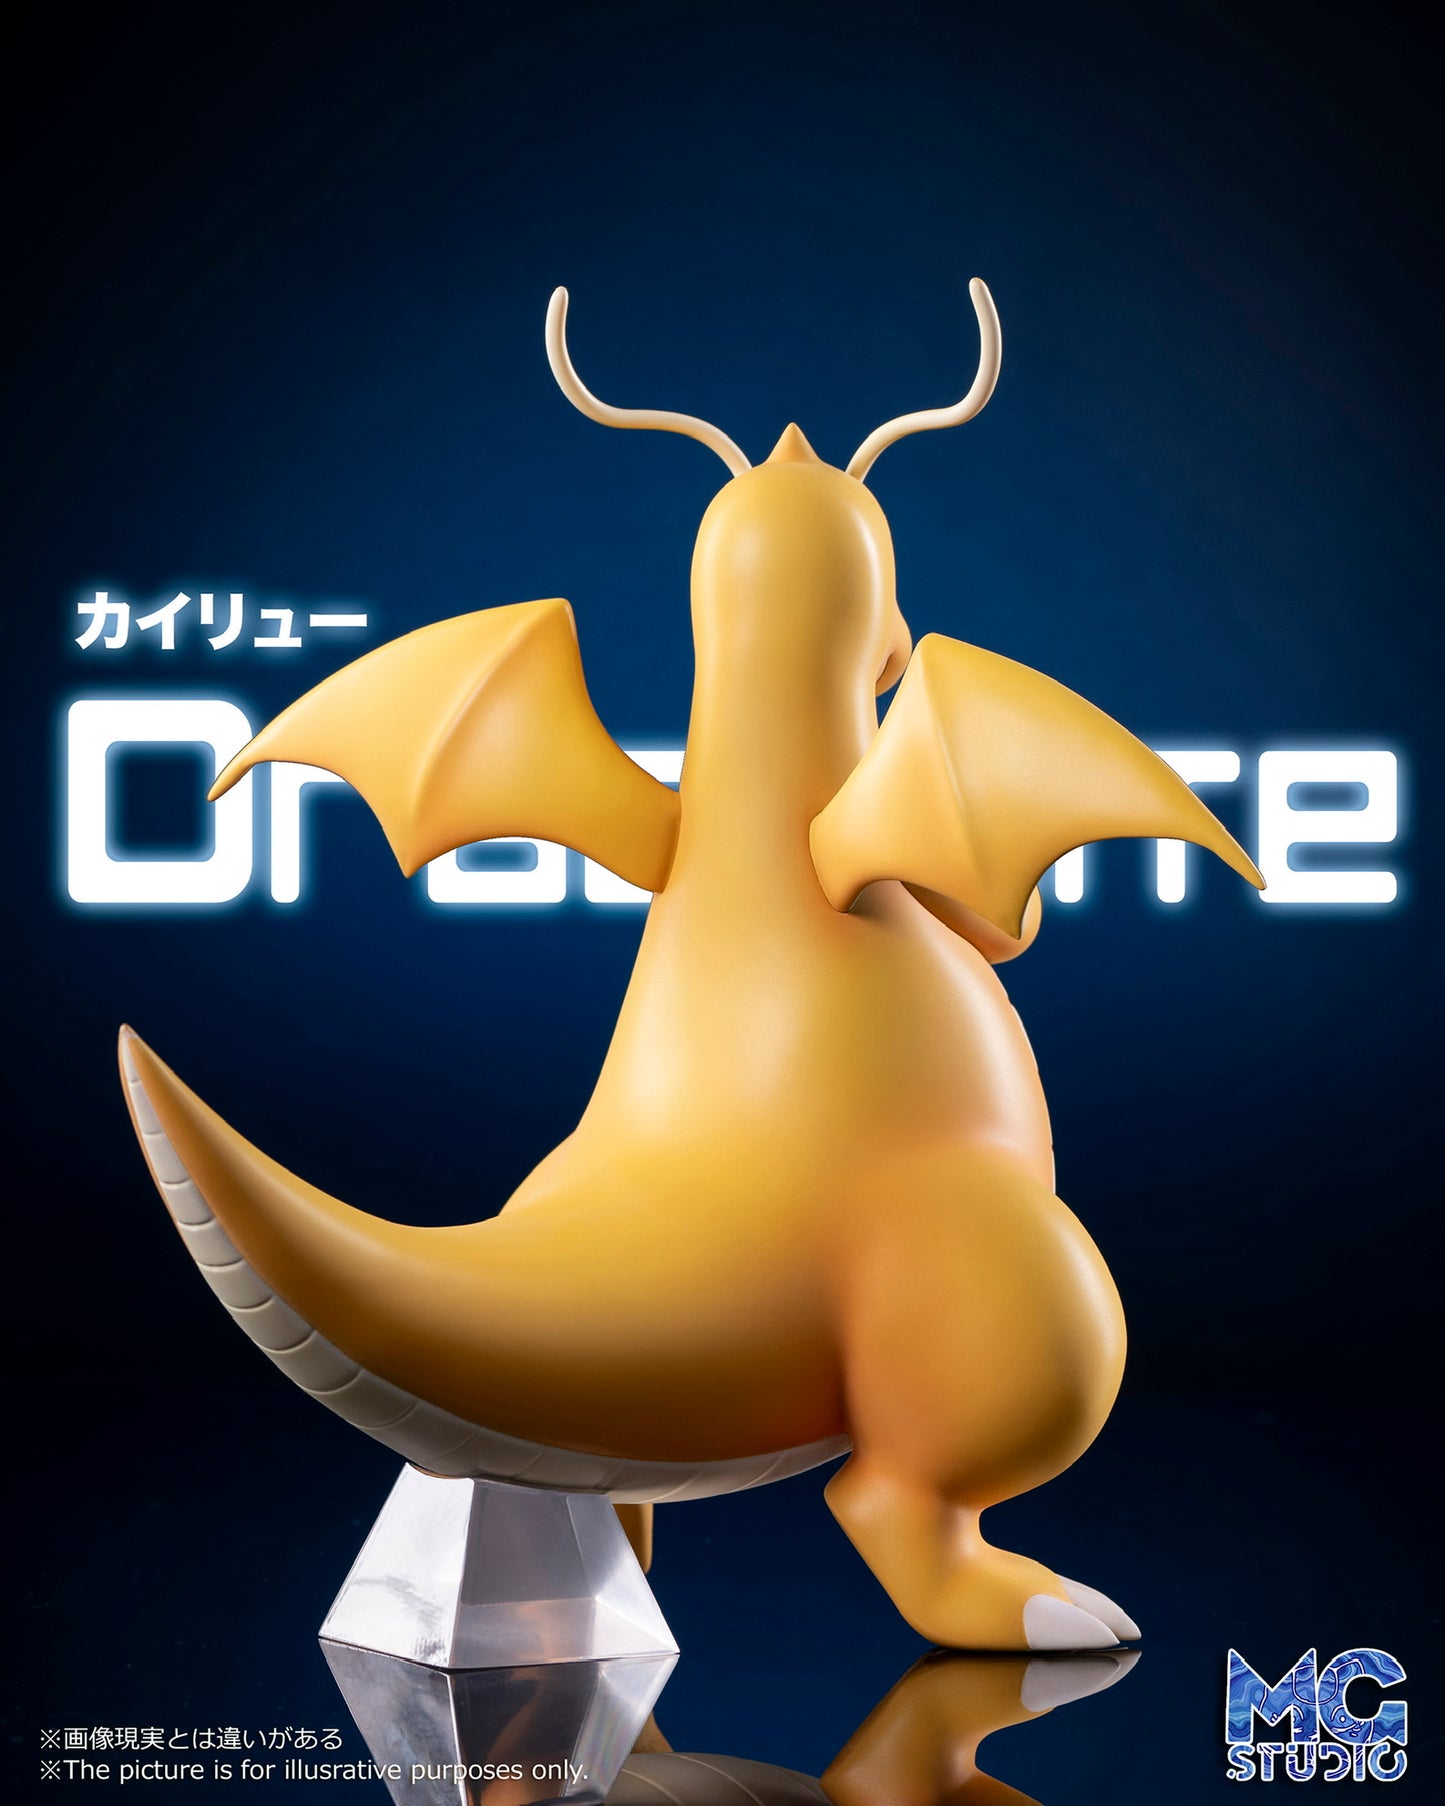 [PREORDER] 1/8 Scale World Figure [MG] - Dragonite